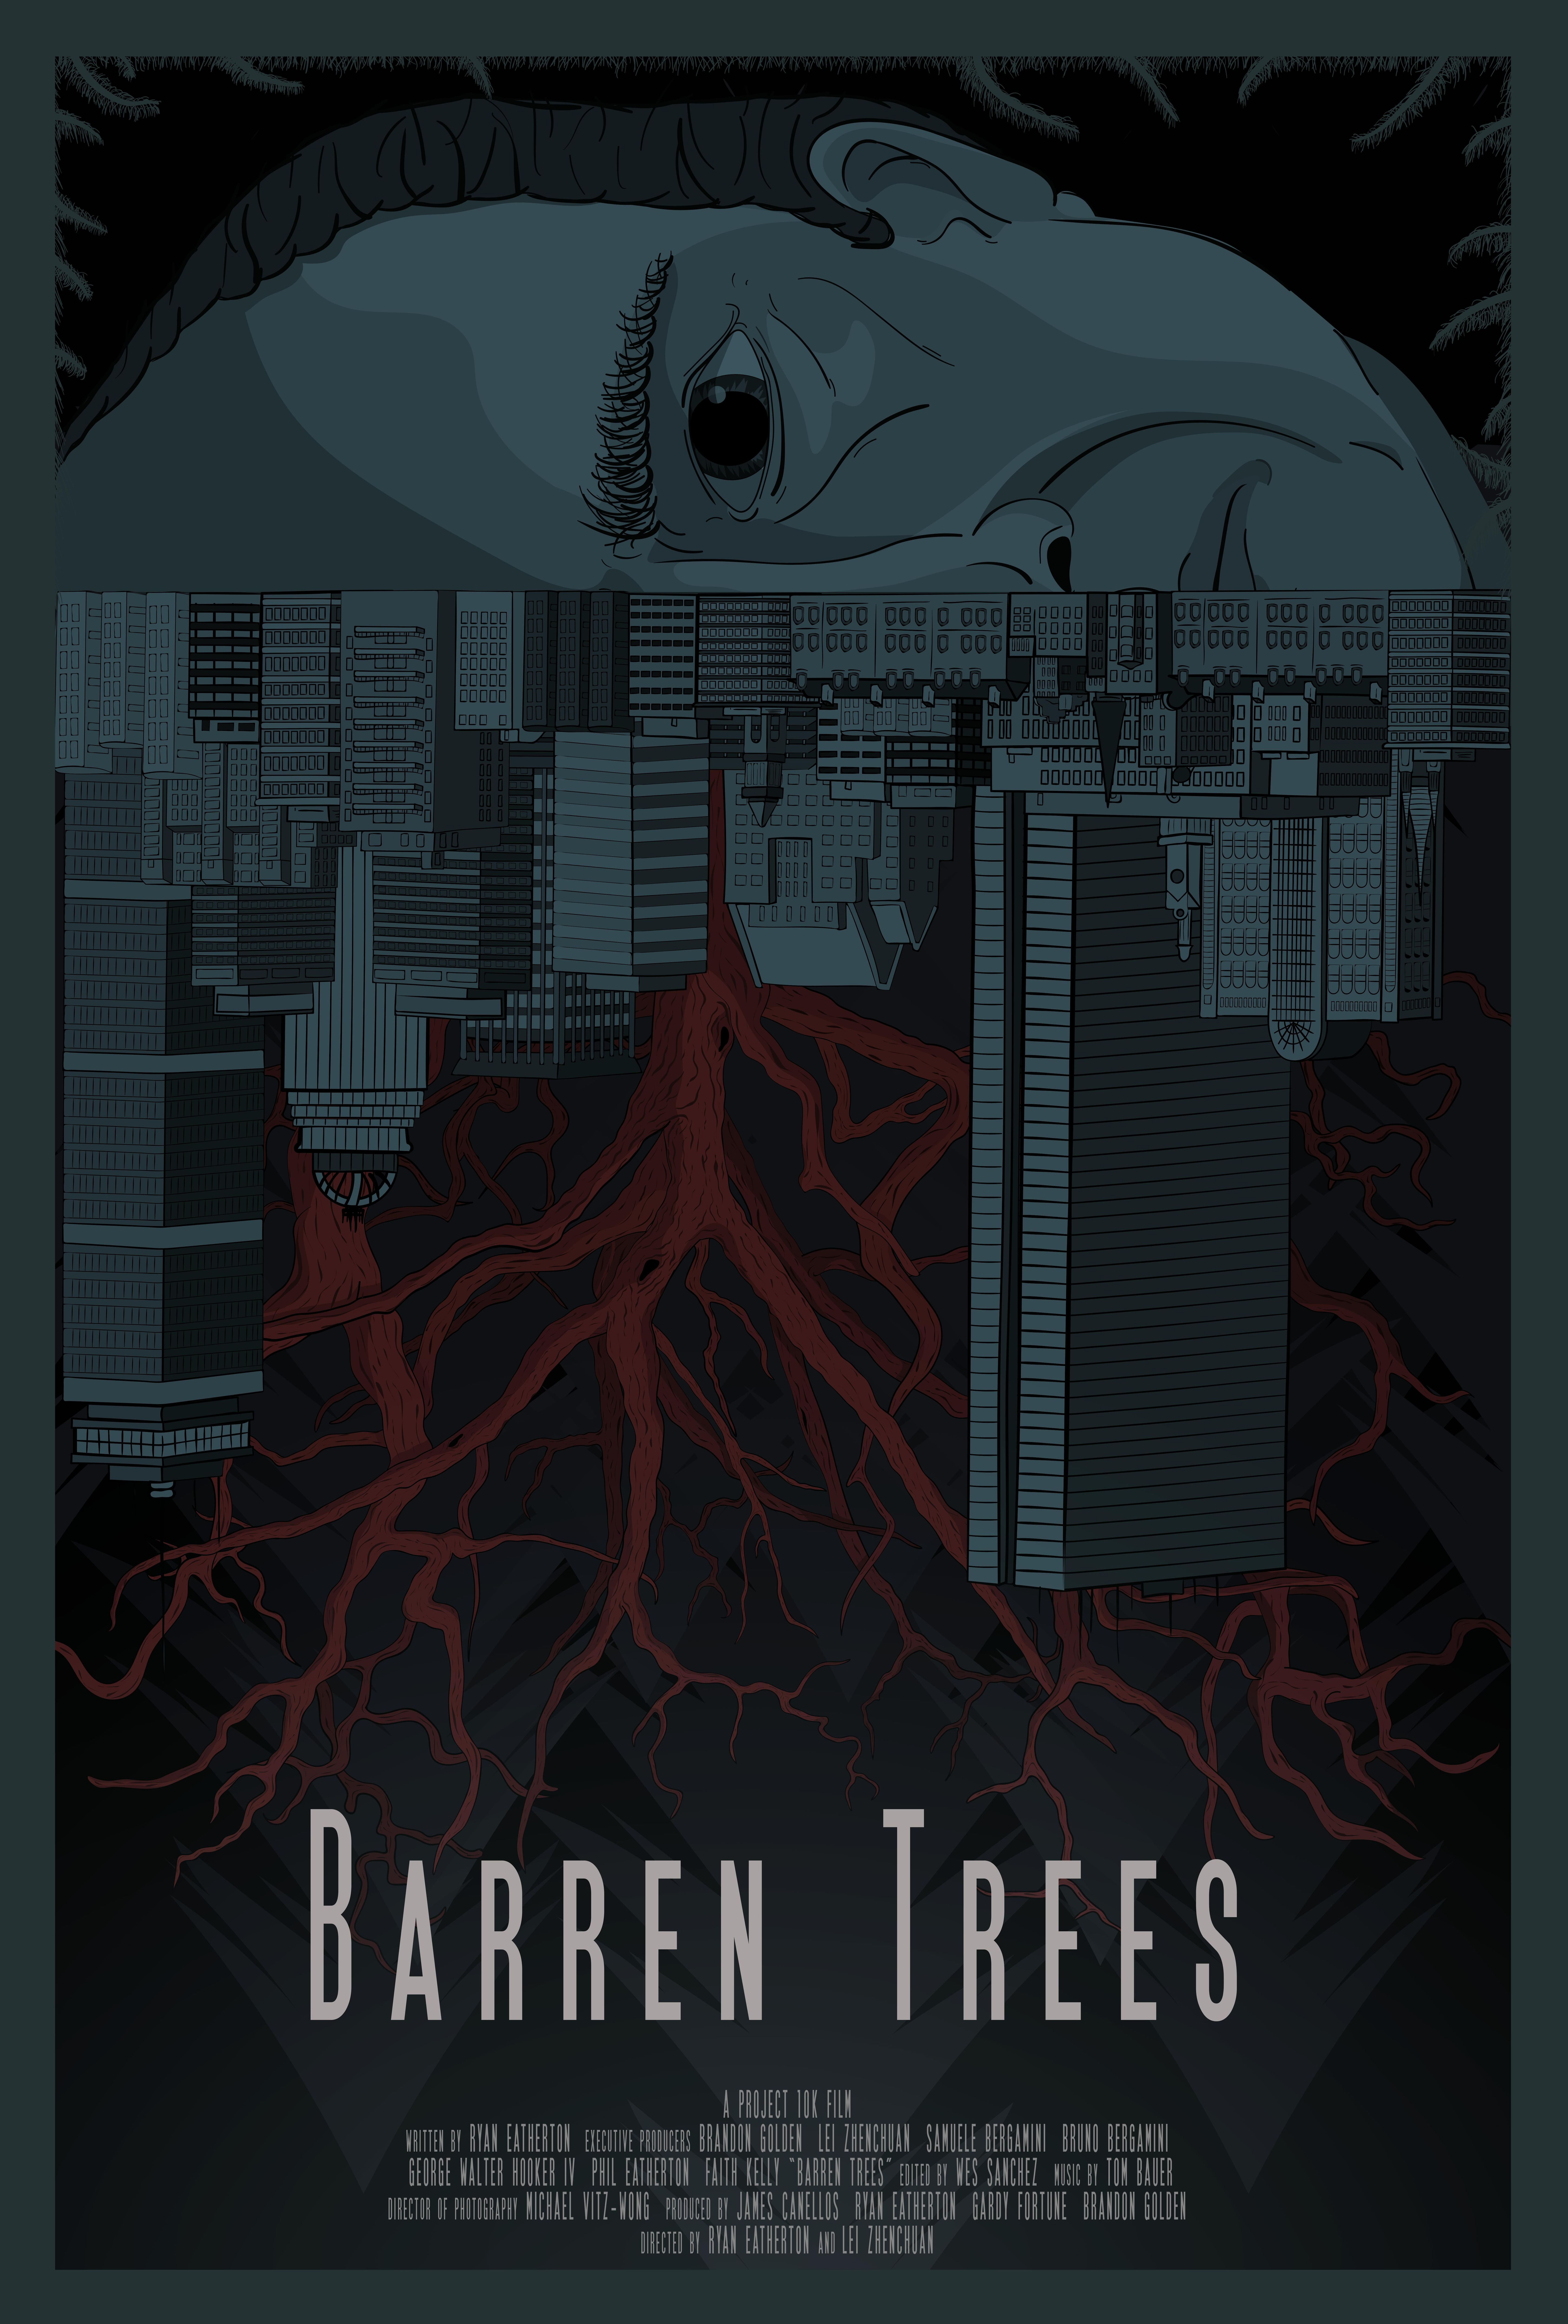 Nonton film Barren Trees layarkaca21 indoxx1 ganool online streaming terbaru